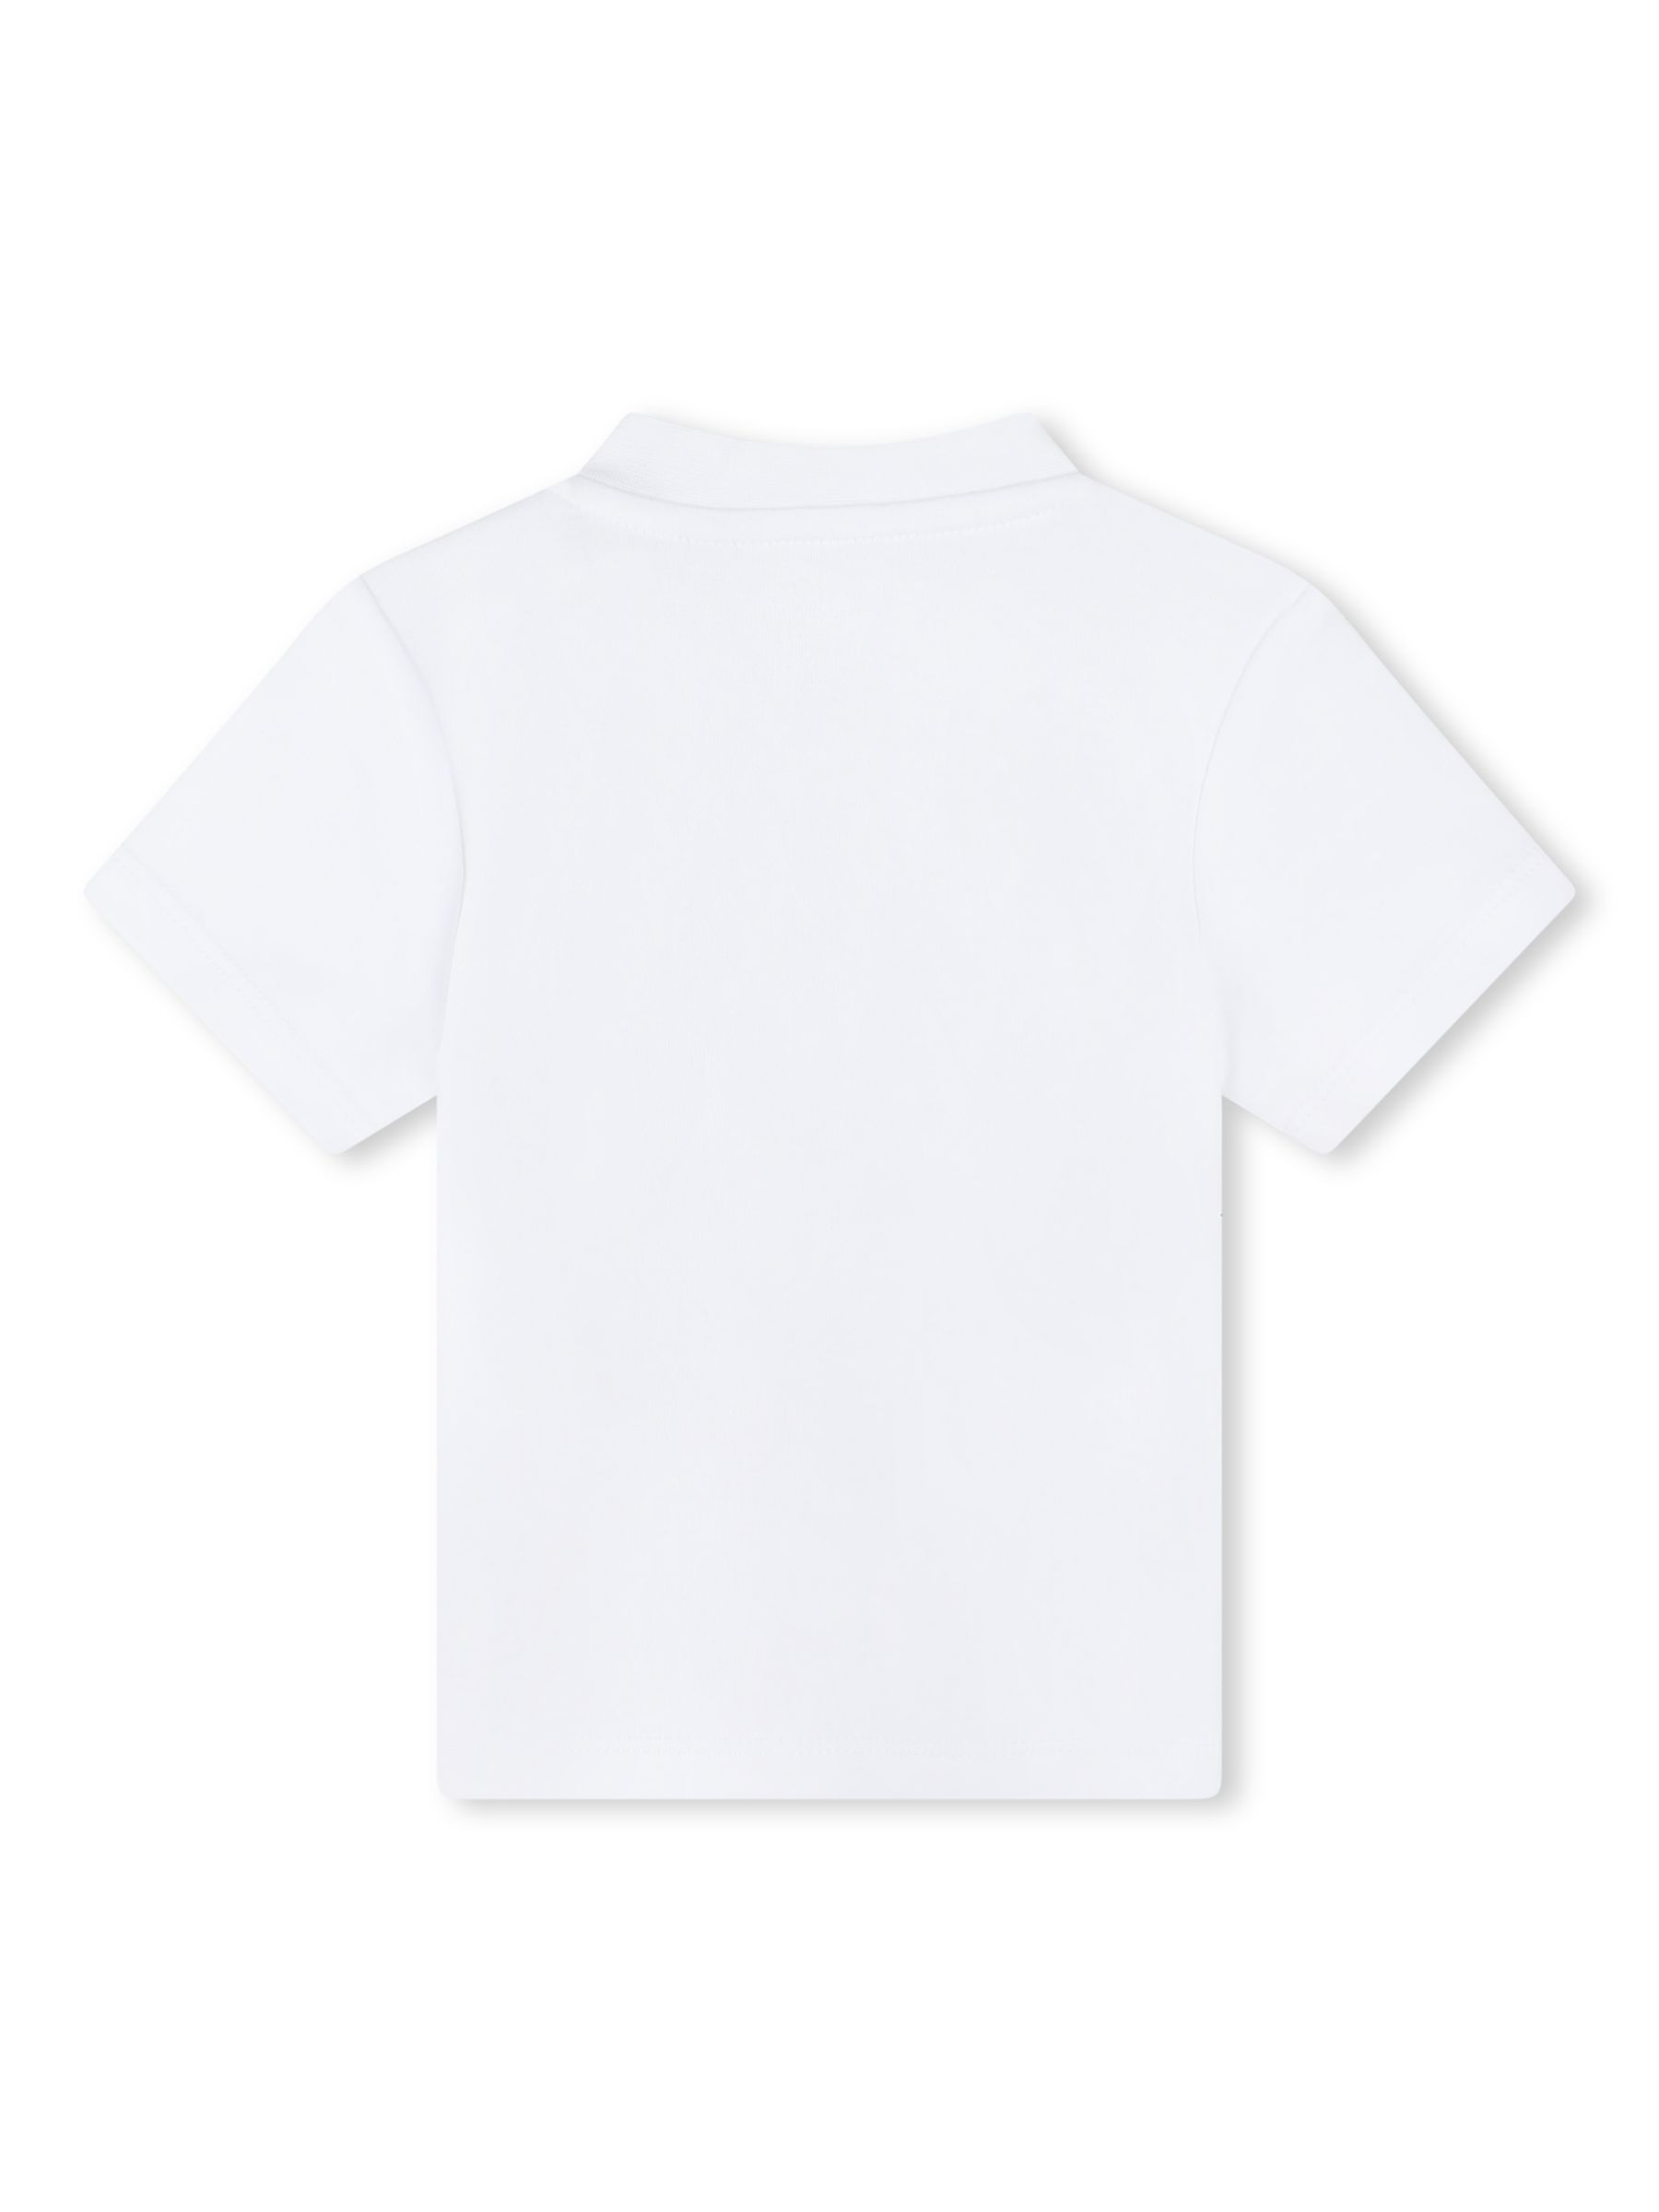 Timberland Baby Logo Graphic T-Shirt, White, 3 months